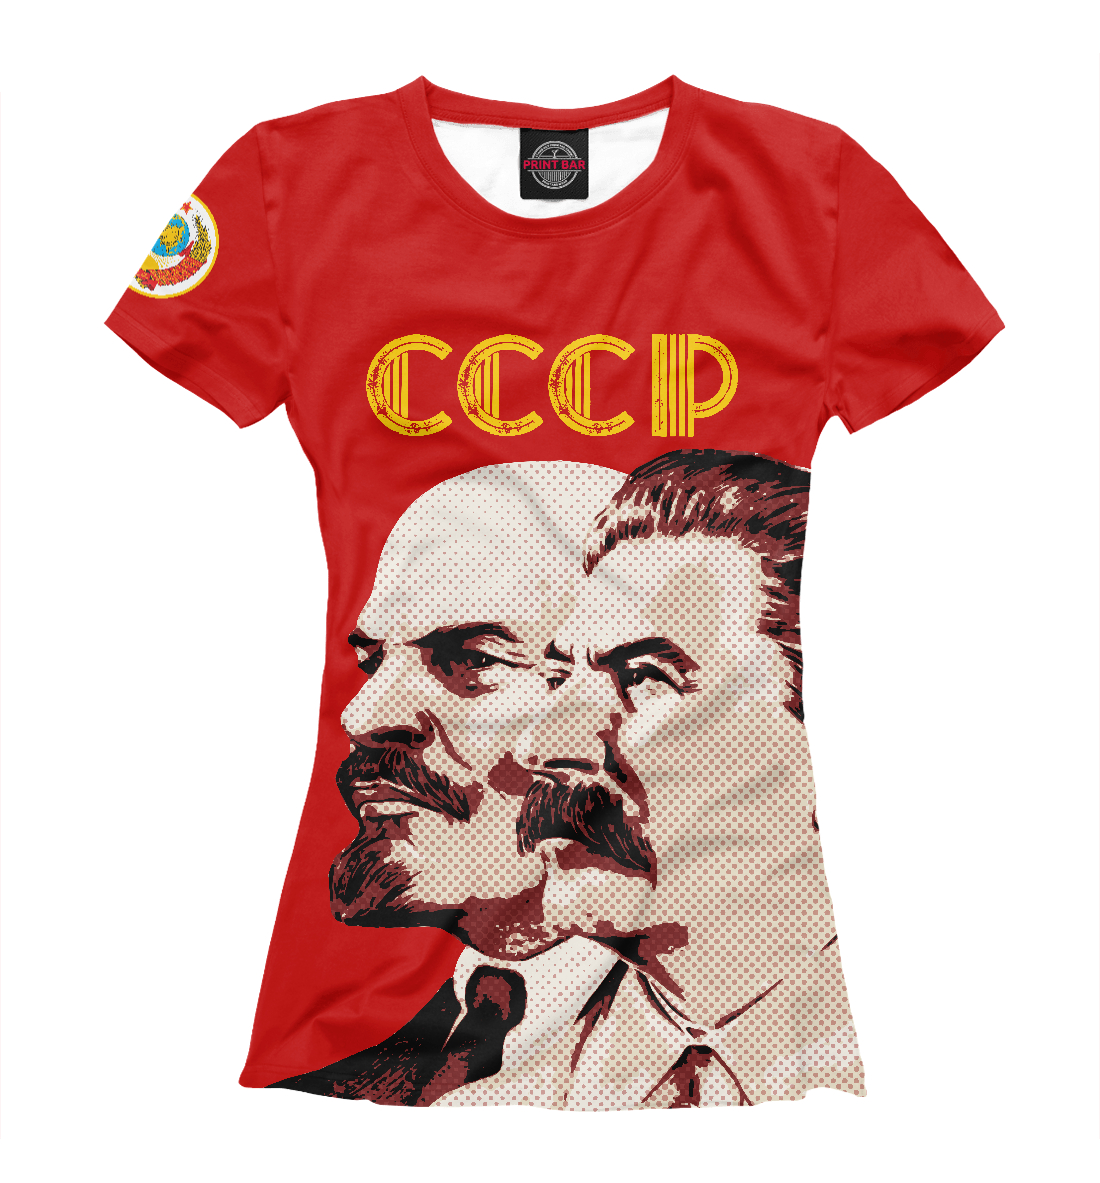 Футболка Ленин - Сталин для девочек, артикул: SSS-394601-fut-1mp